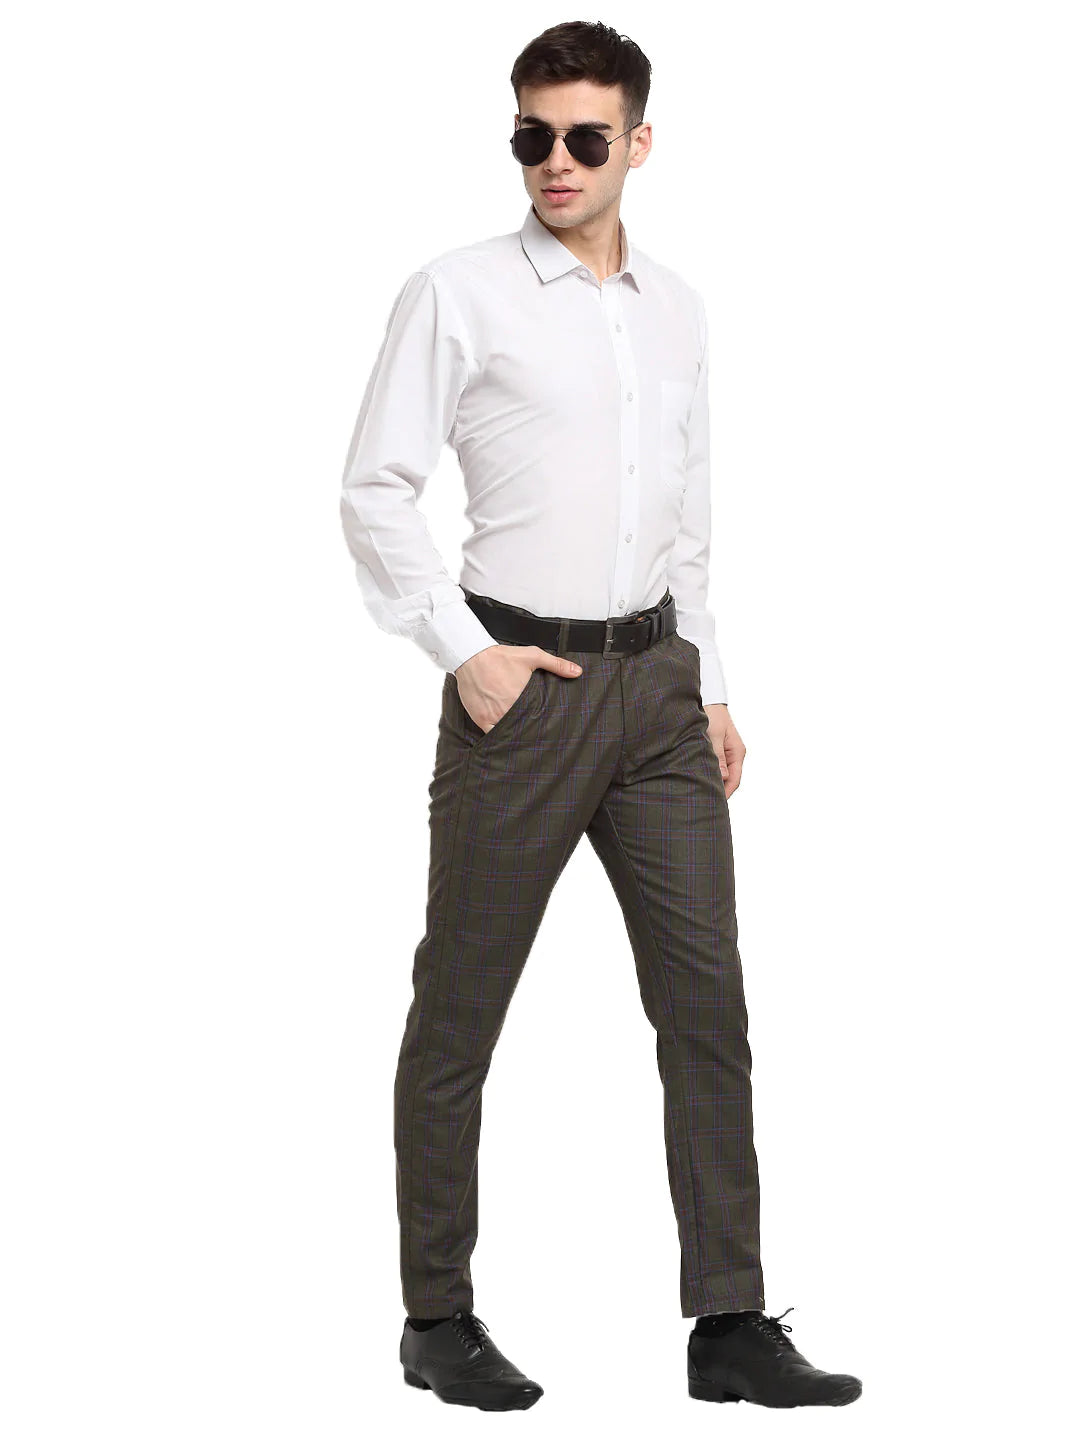 Jainish Men's Black Cotton Checked Formal Trousers ( FGP 267Charcoal )